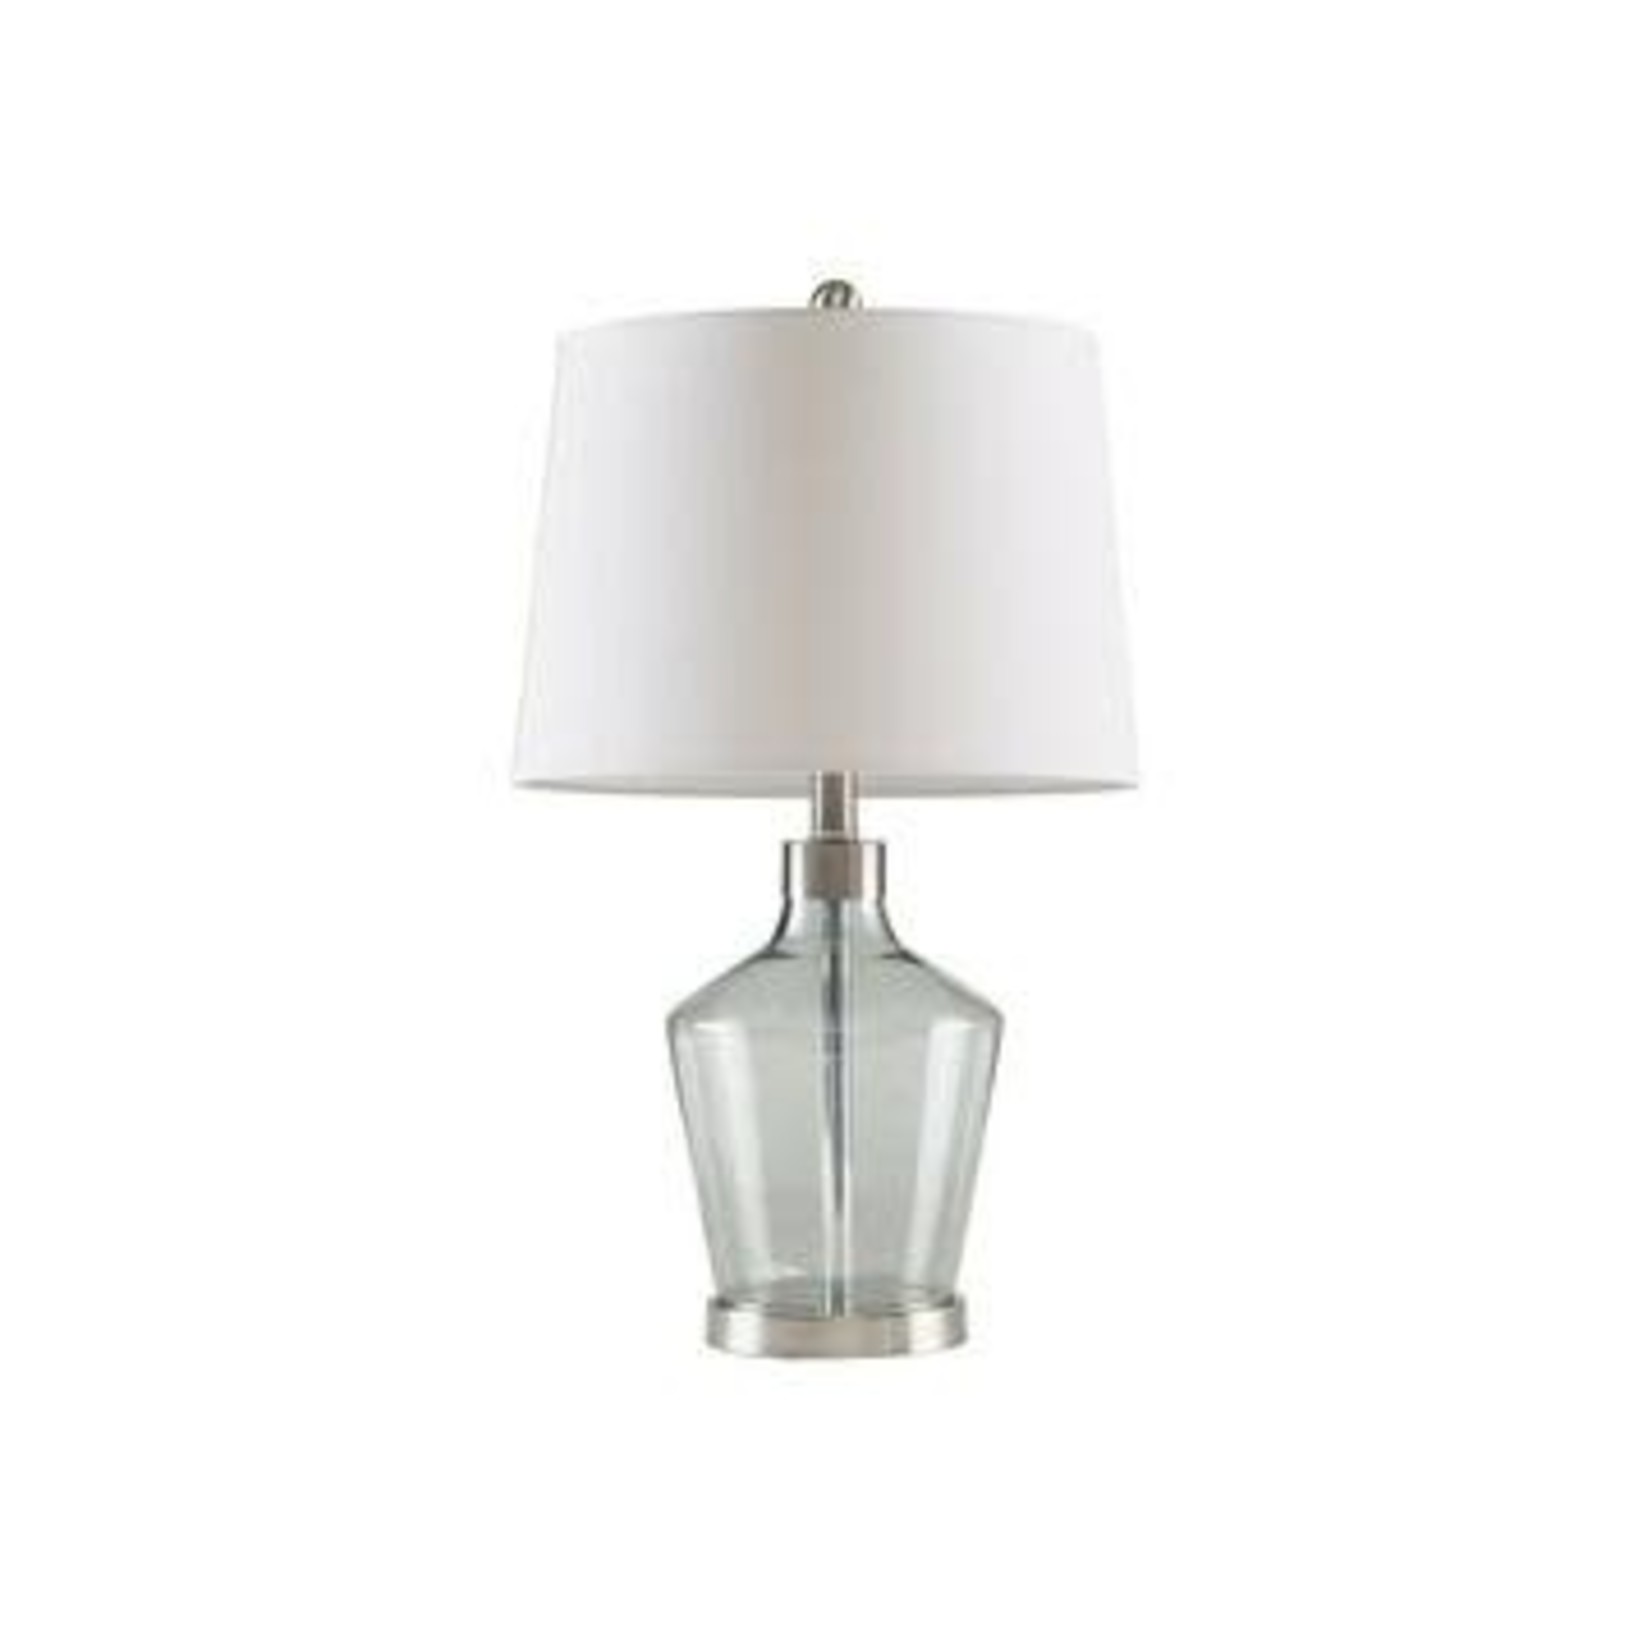 Mickler & Co. Harmon Table Lamp